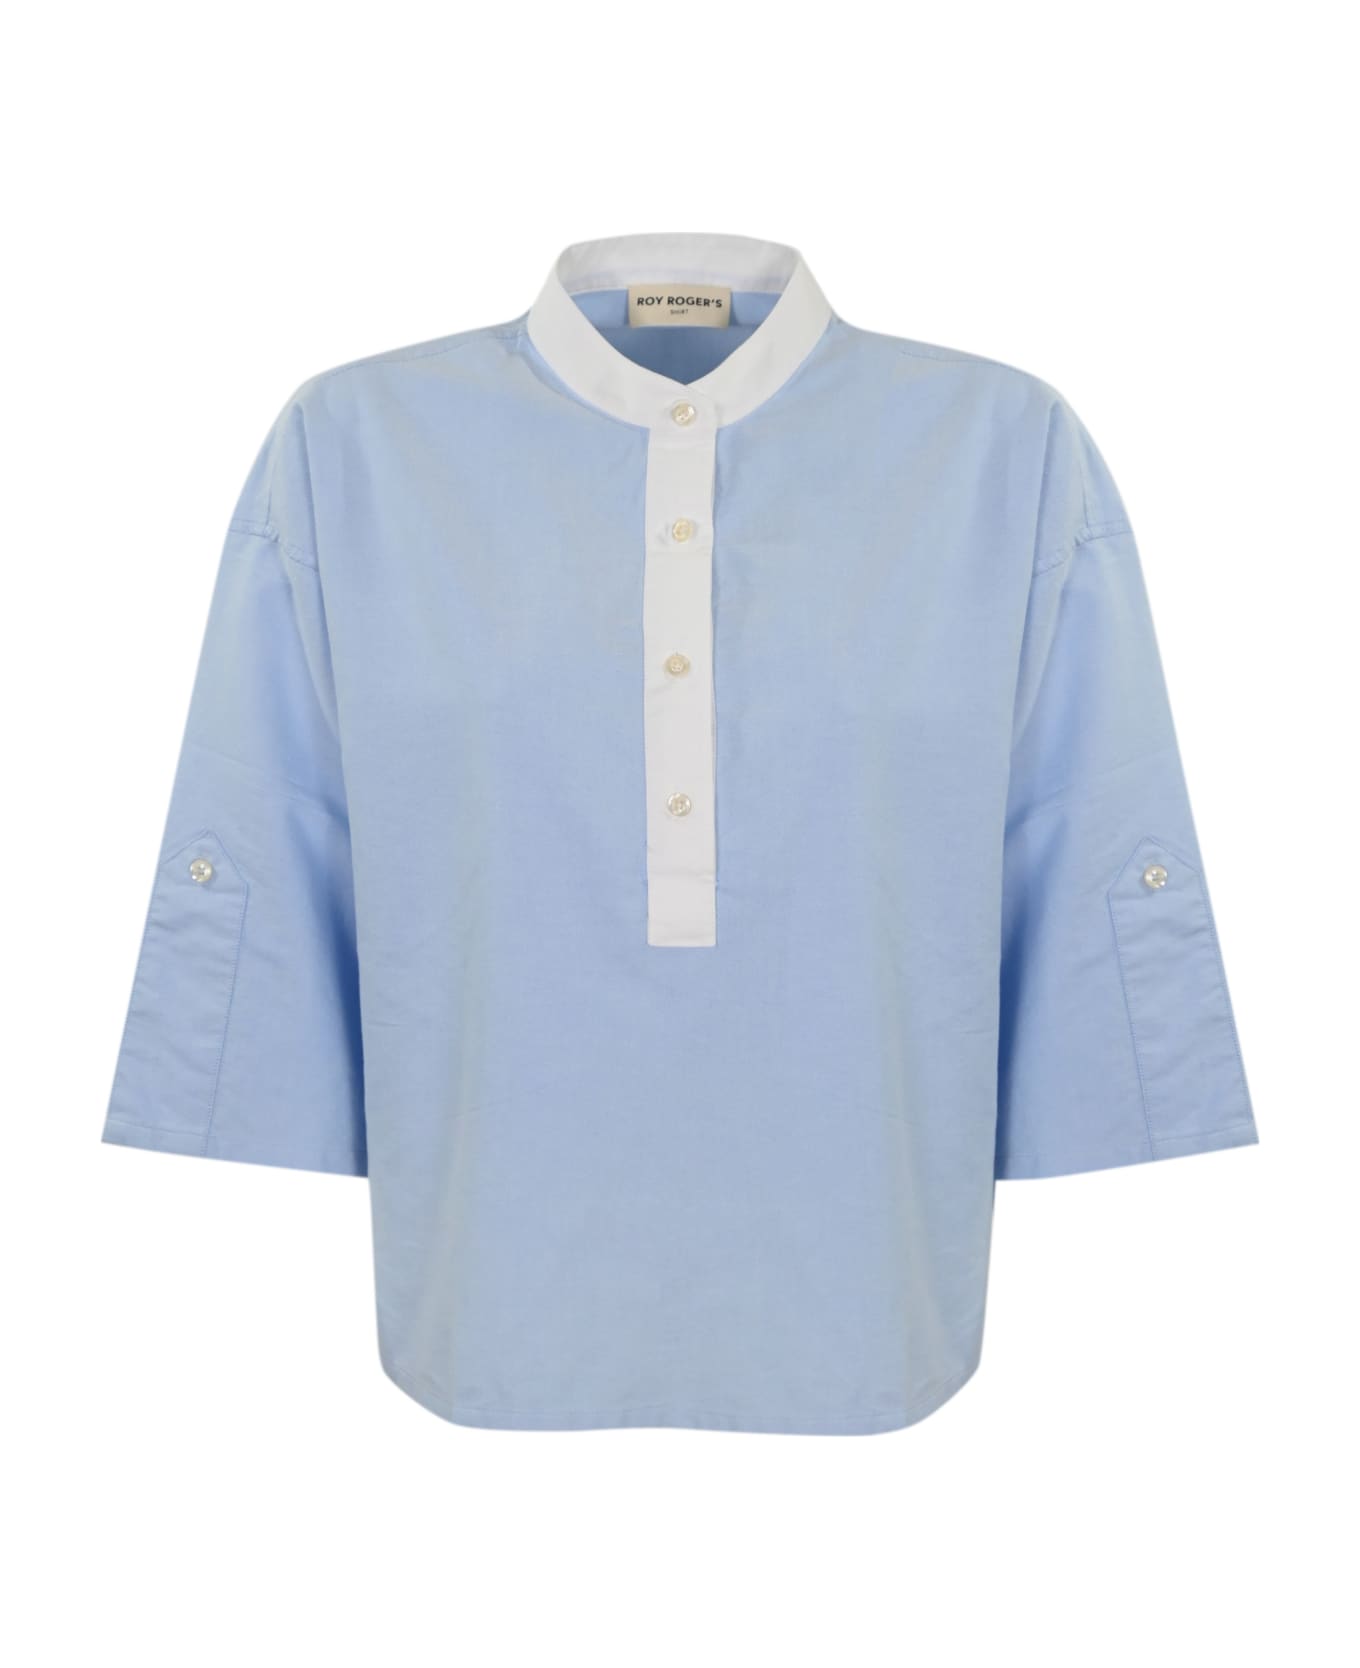 Roy Rogers Mandarin Collar Shirt - Washed sky